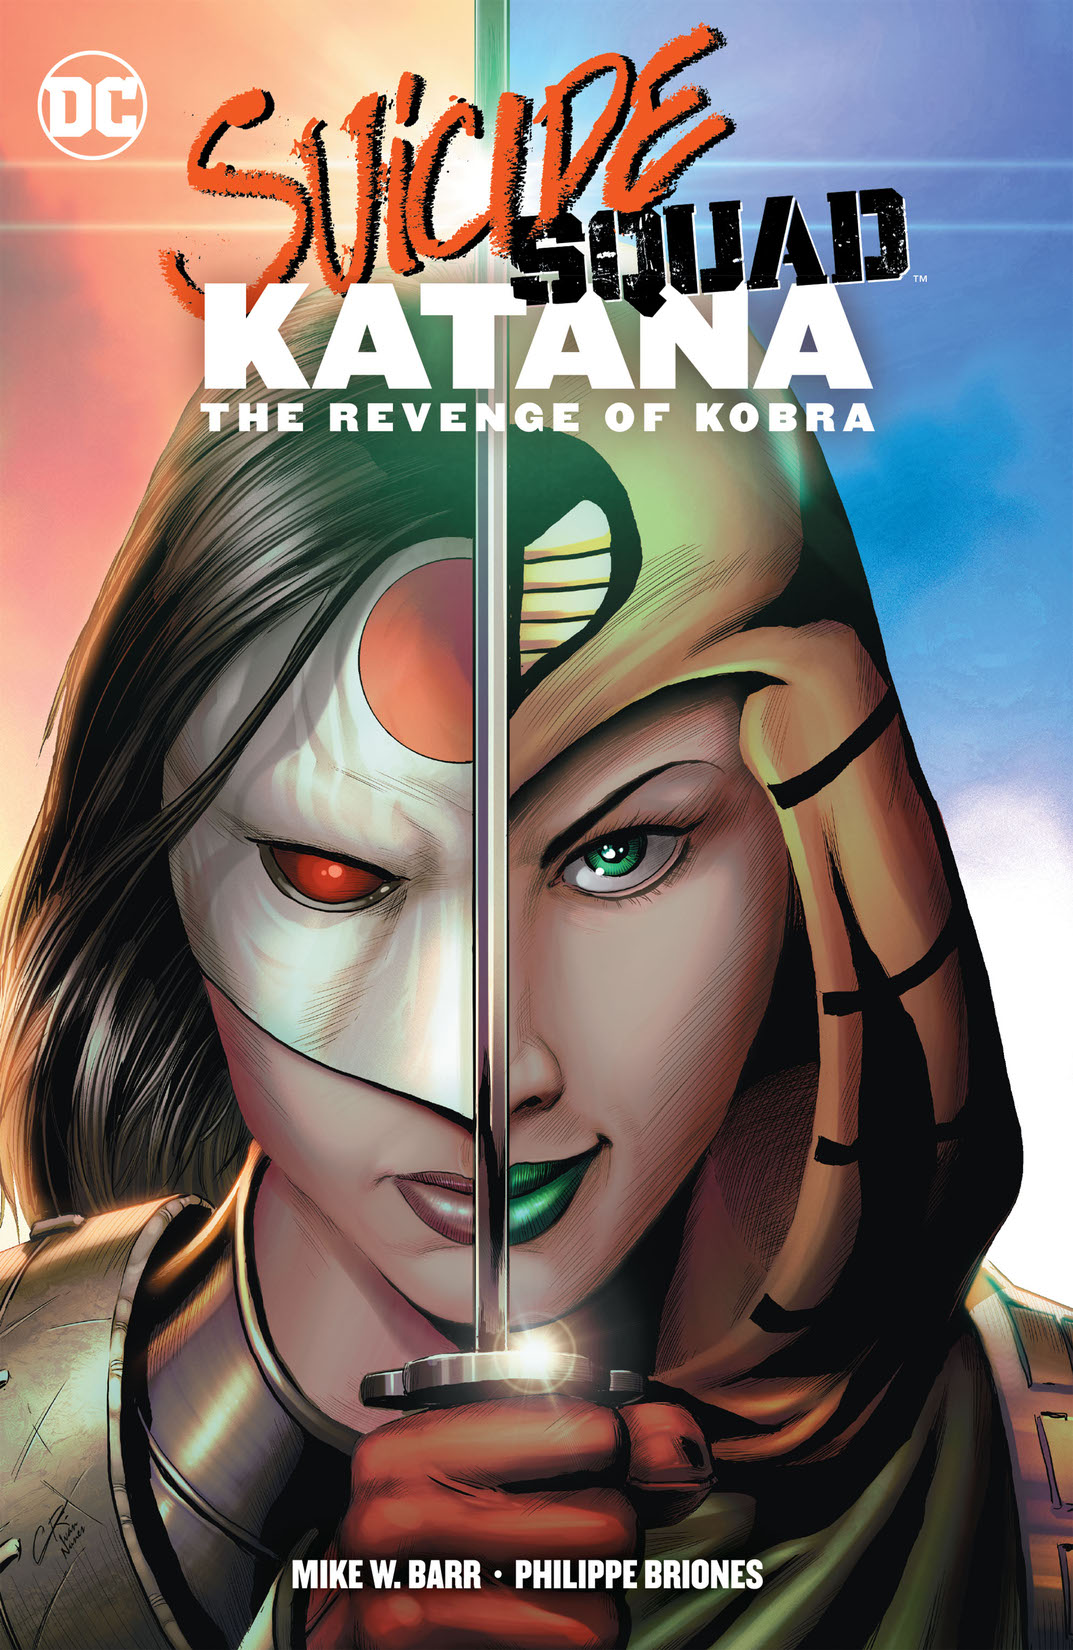 Suicide Squad: Katana: The Revenge of Kobra preview images